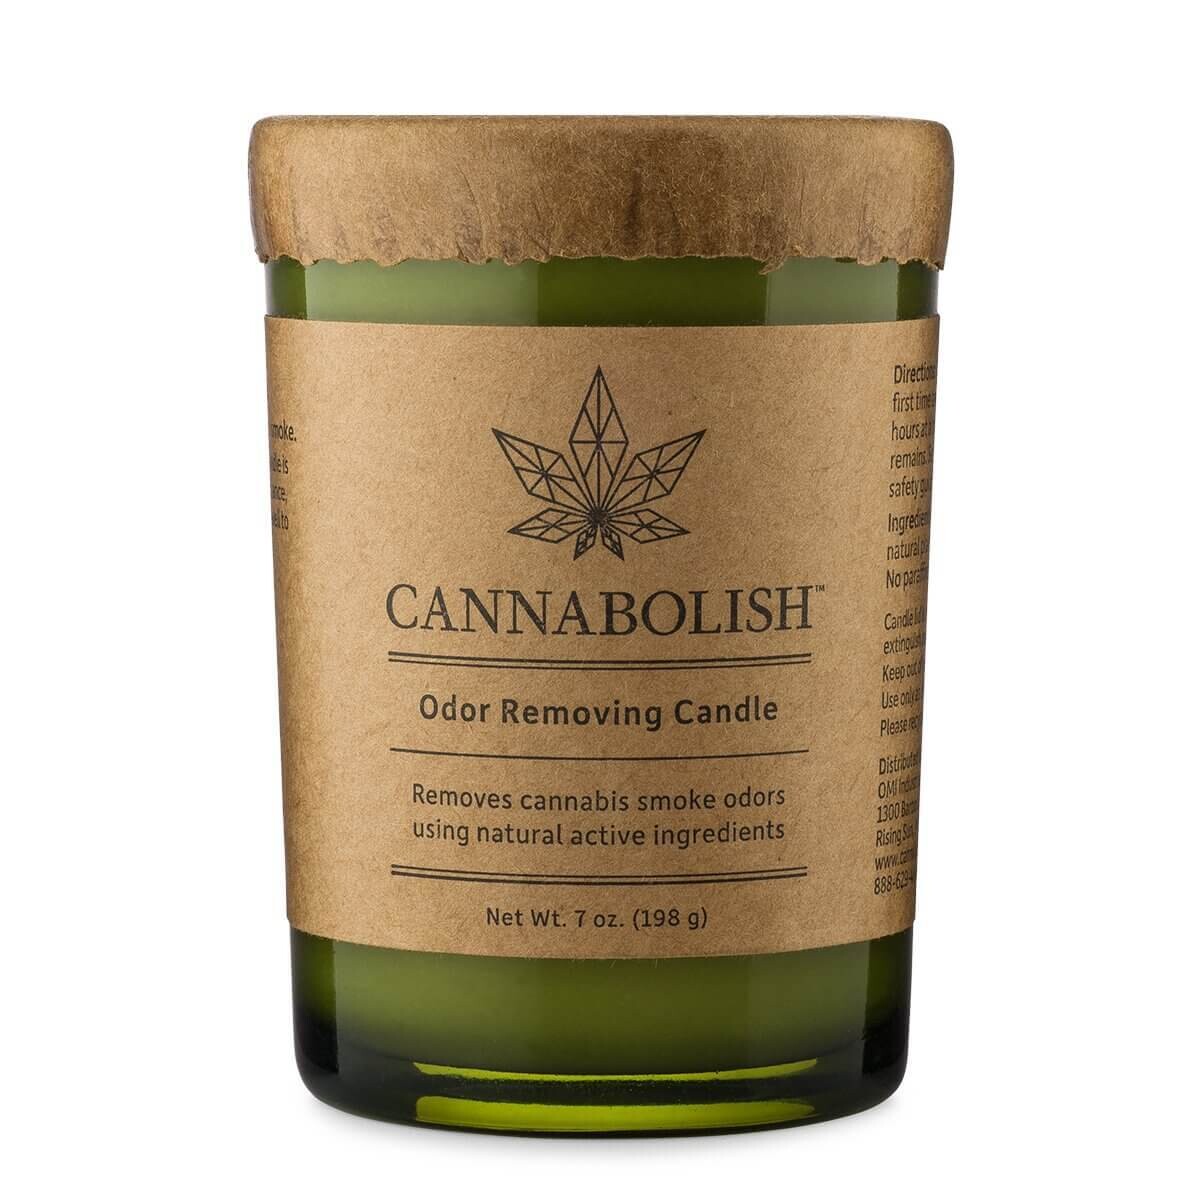 Cannabolish - Odor Removing Candle